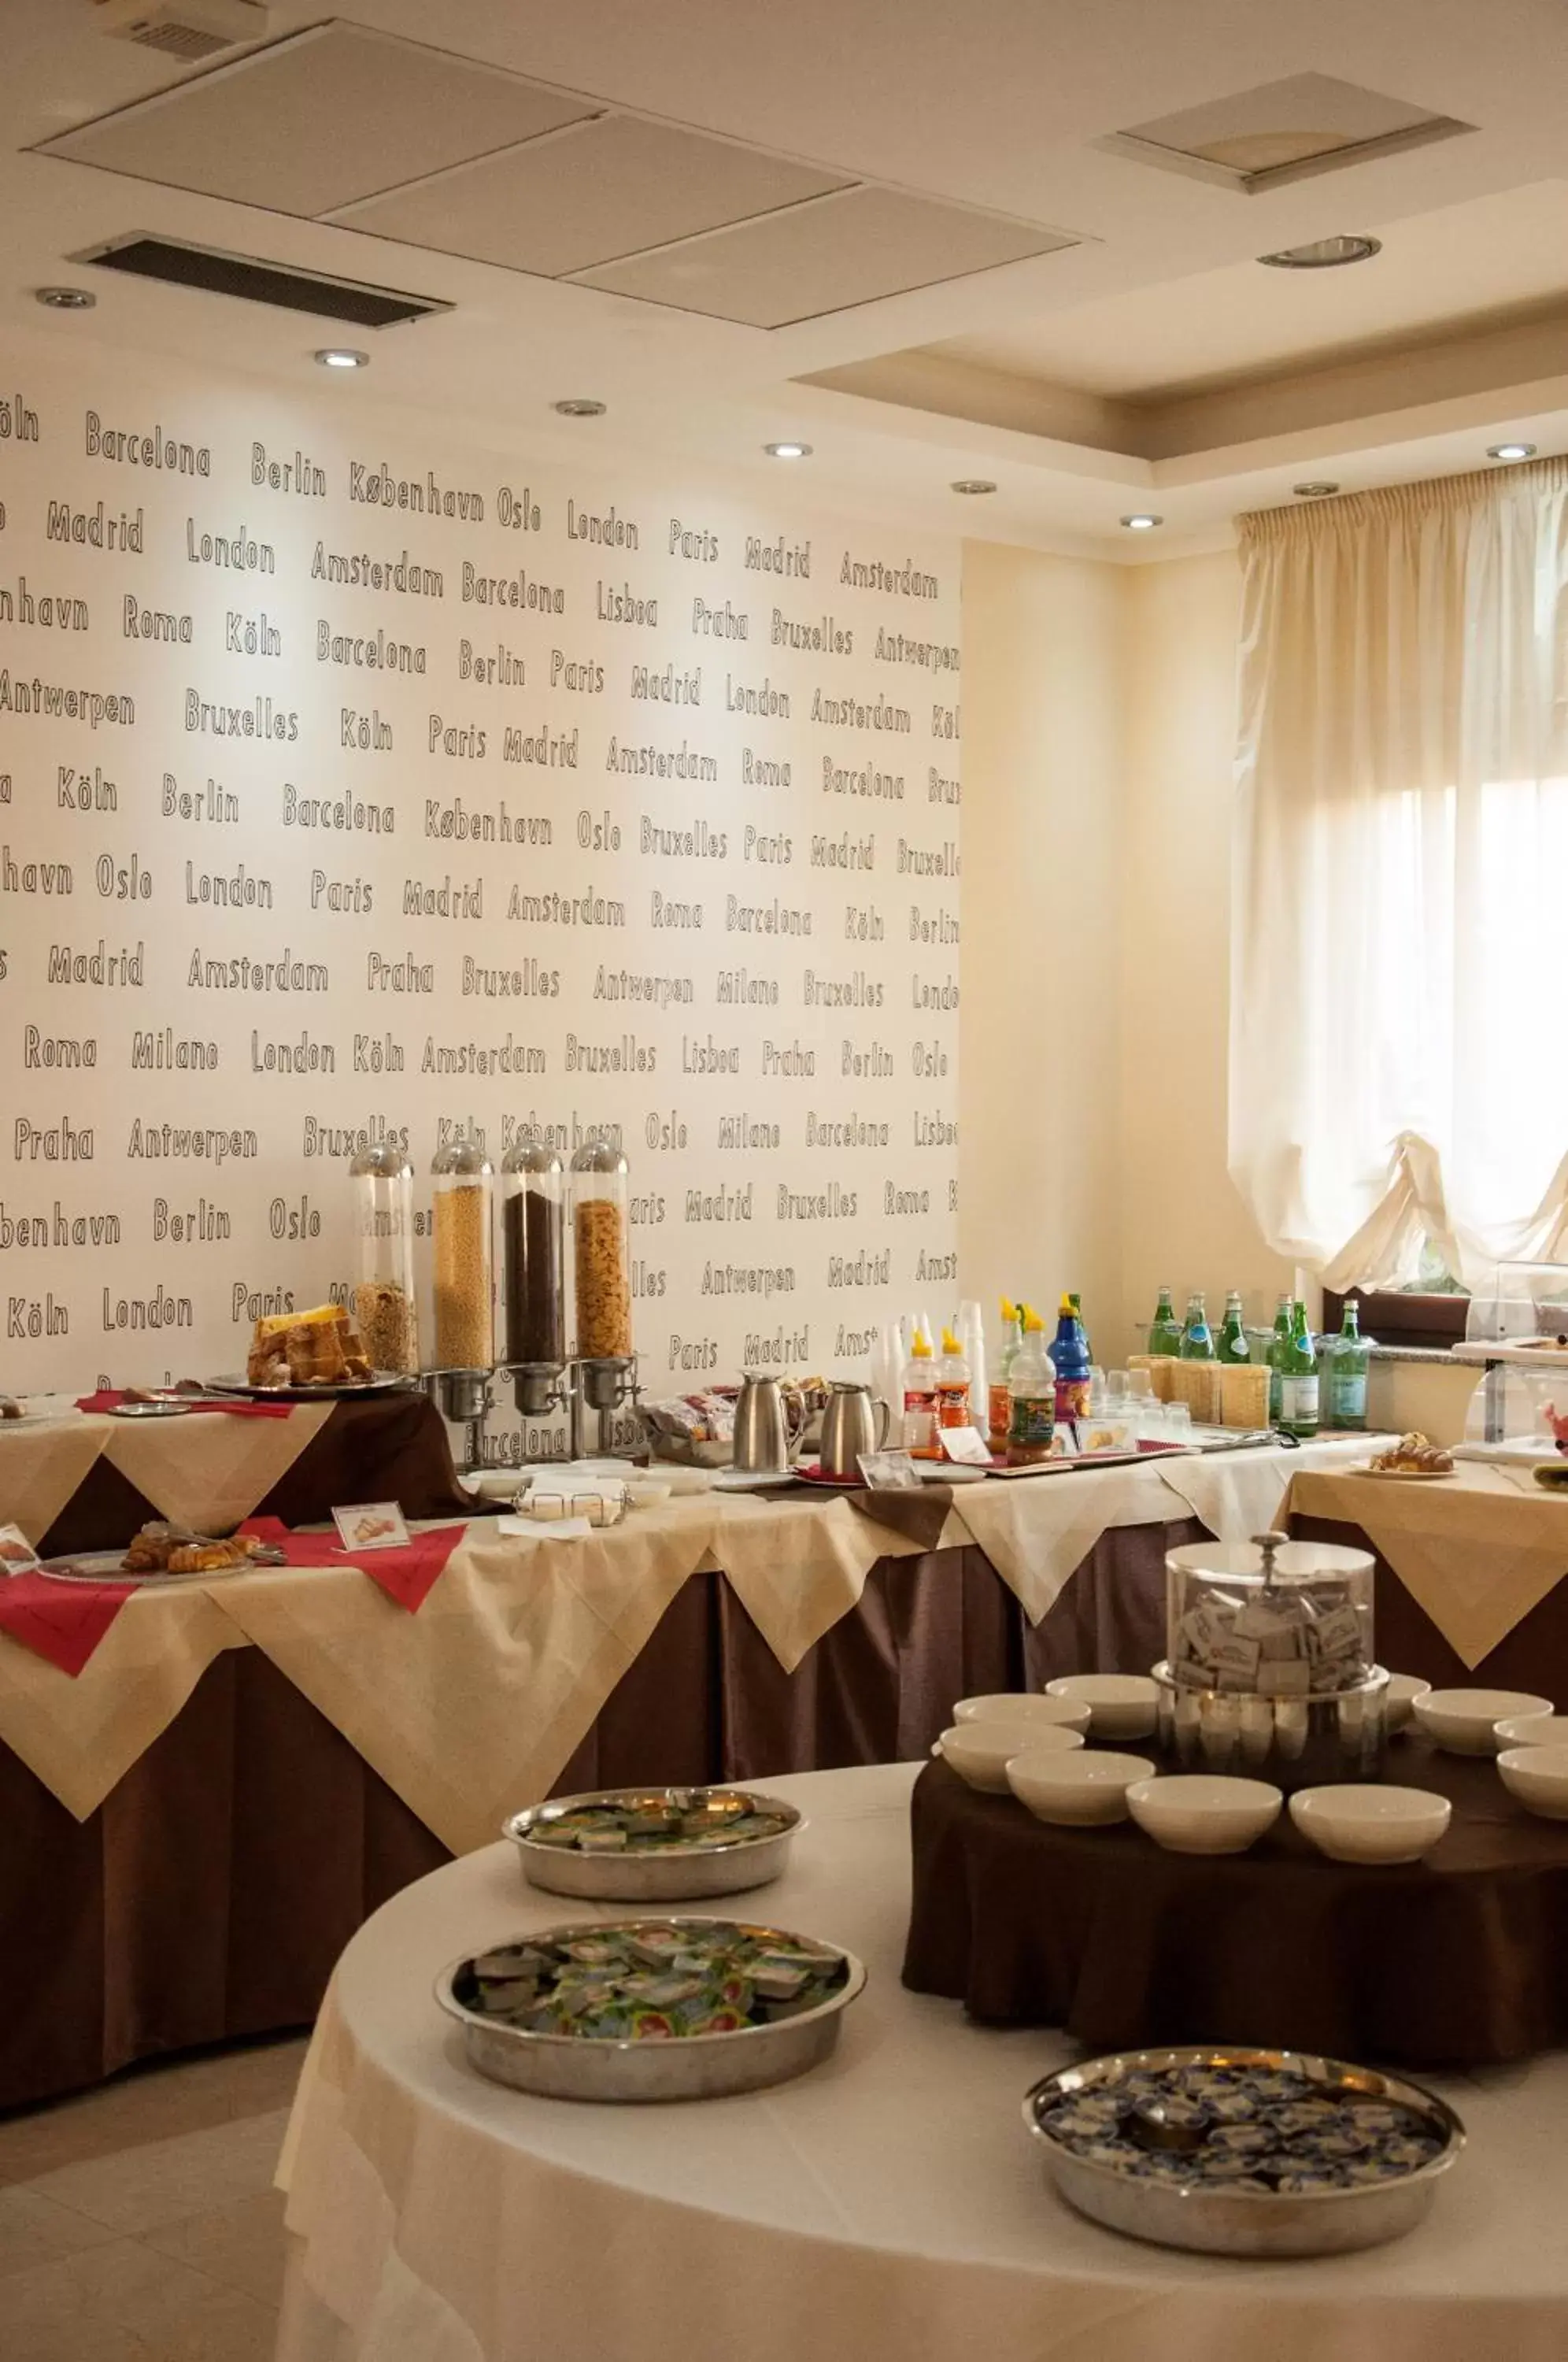 Food, Banquet Facilities in Grand Hotel Paradiso